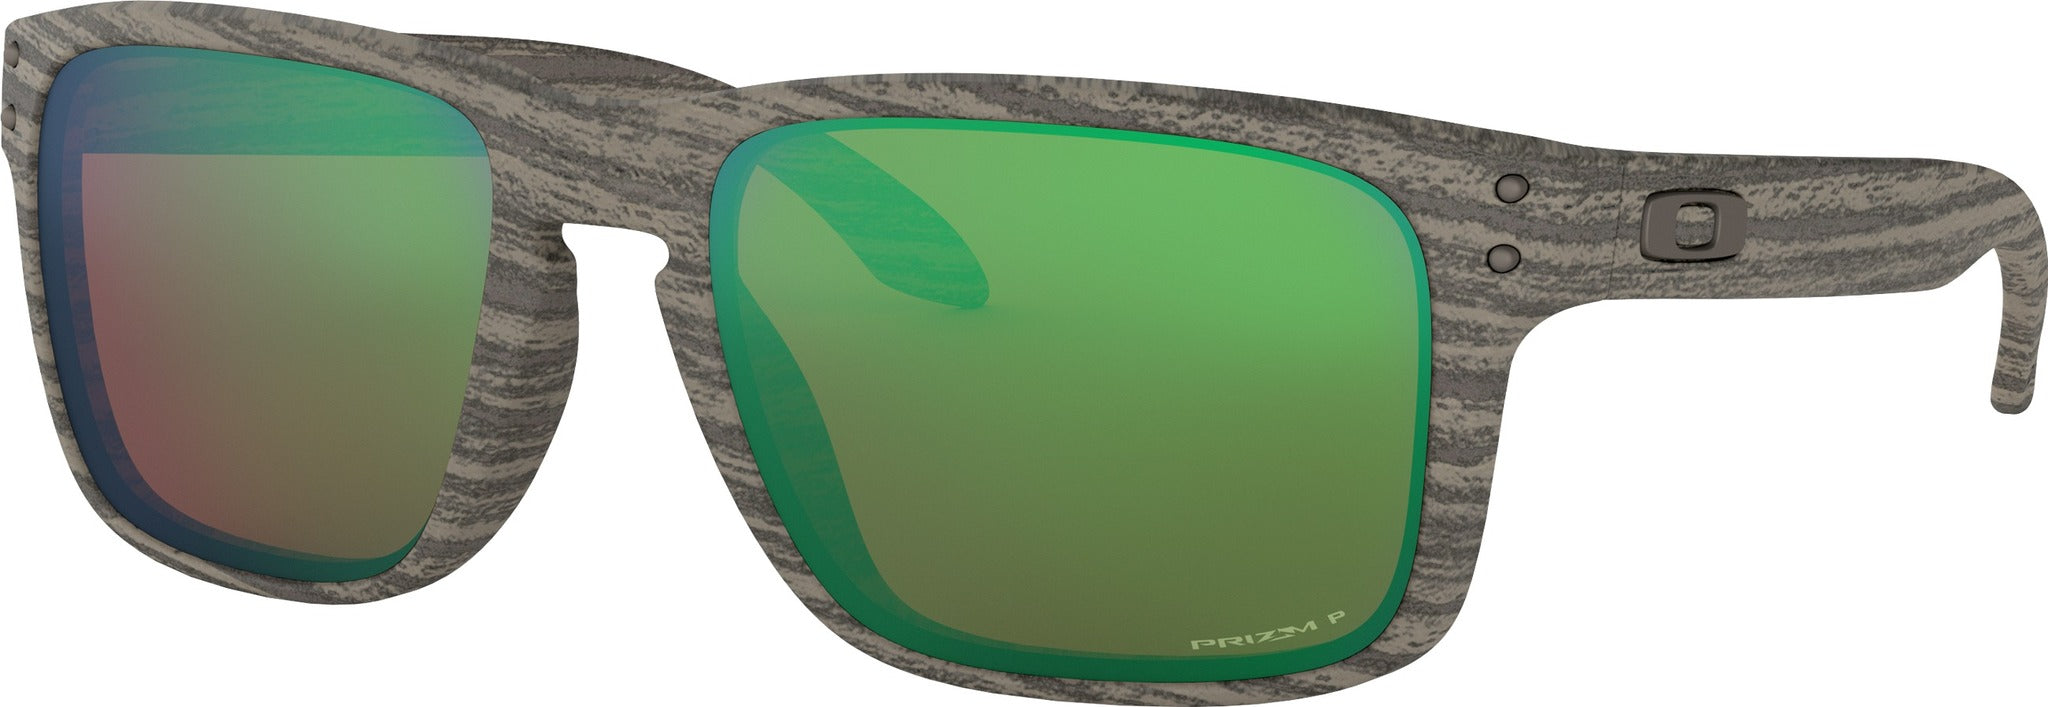 Oakley Holbrook Sunglasses - Woodgrain - Prizm Shallow Water Polarized Lens  | Altitude Sports